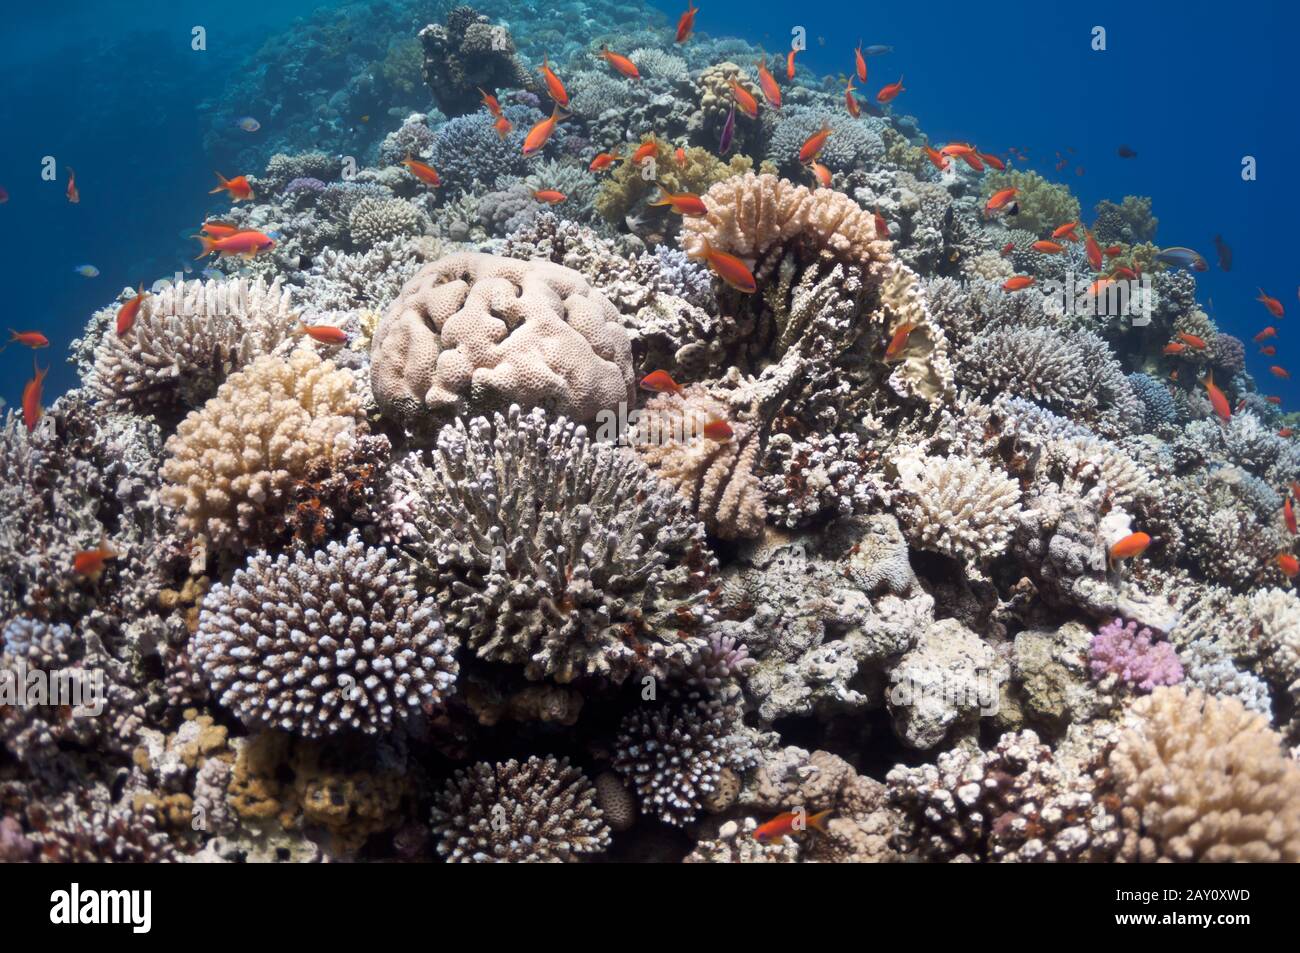 Beautiful coral reef near the Dahab city of Egypt Stock Photo - Alamy